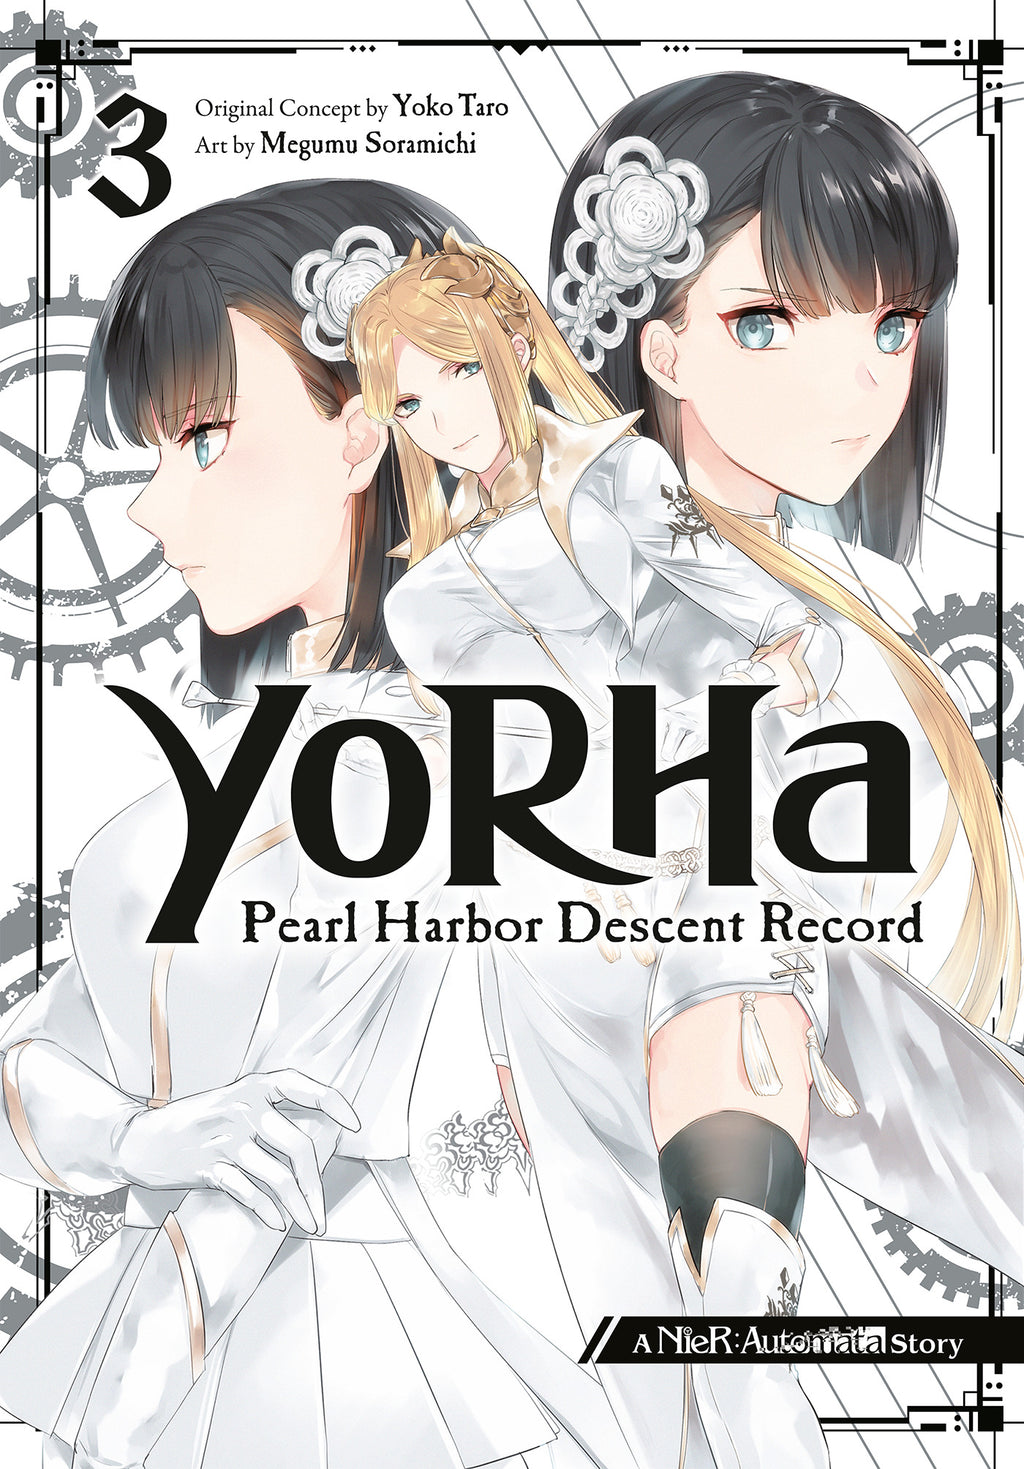 YoRHa: Pearl Harbor Descent Record - A NieR:Automata Story 02 by Yoko Taro:  9781646092000